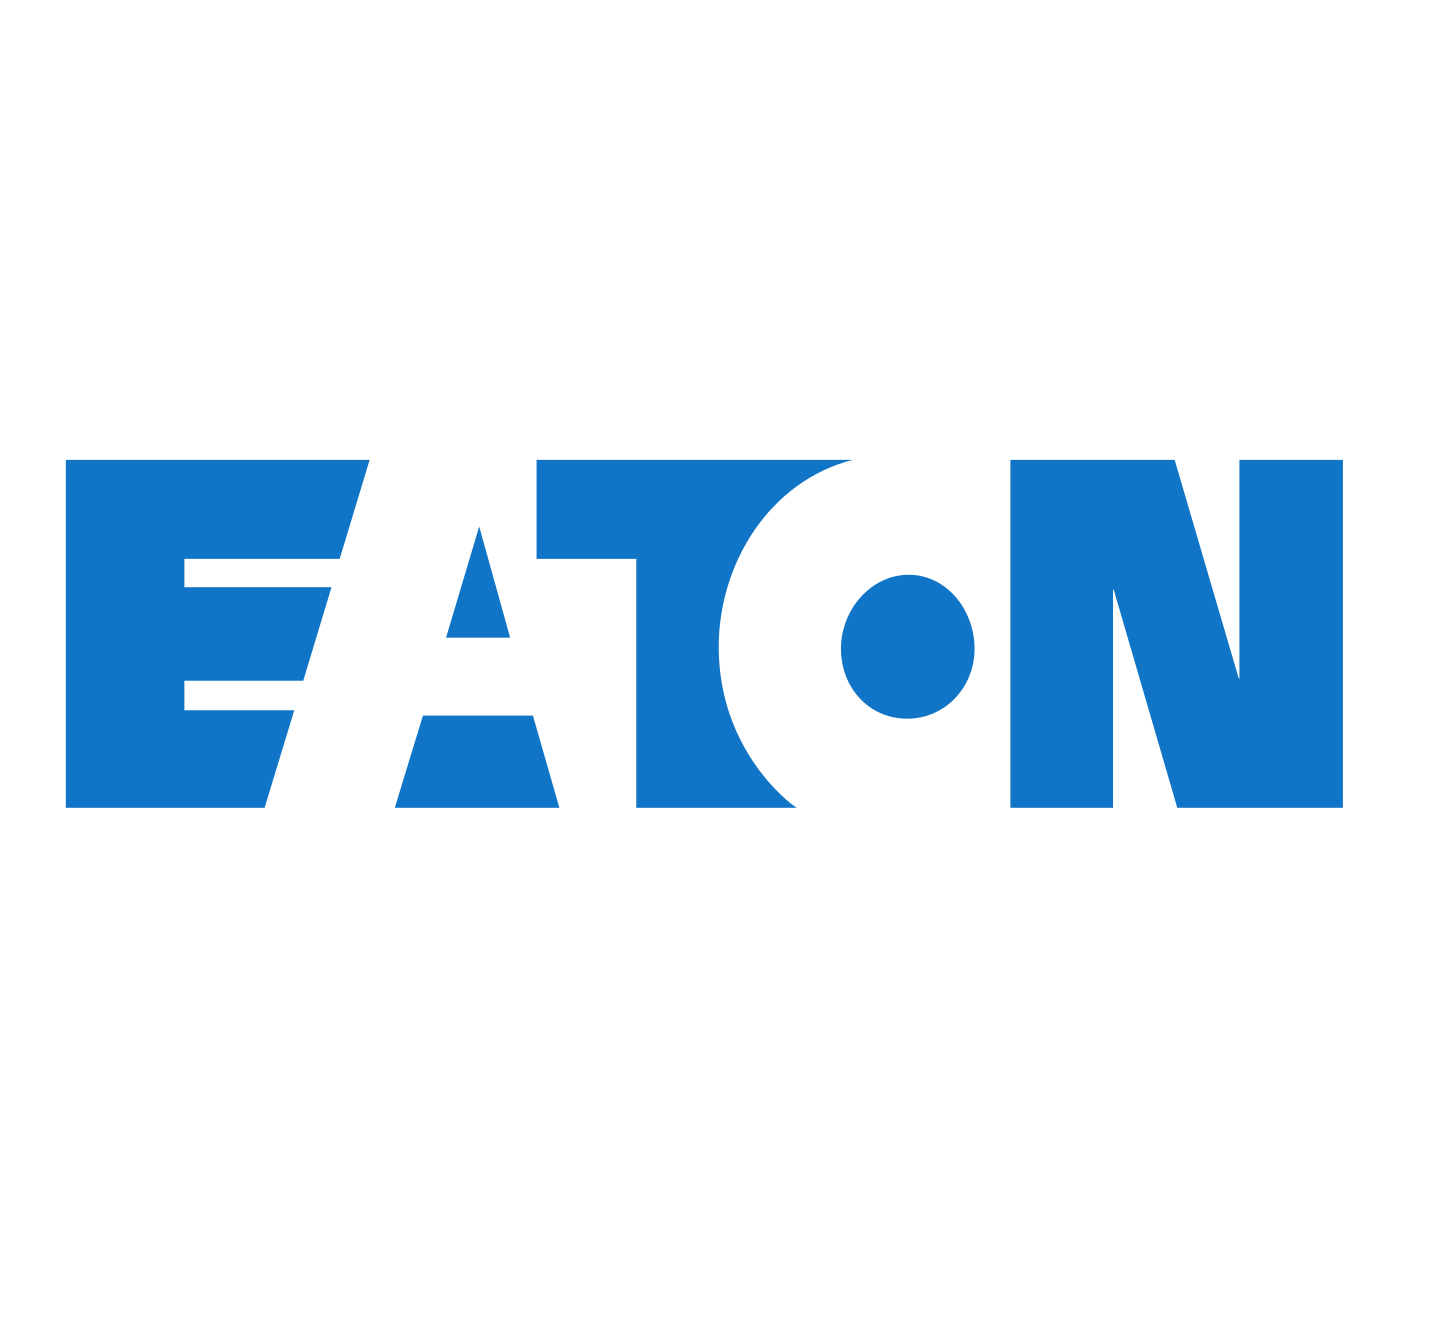 1280px-Eaton_Corporation_logo square.png